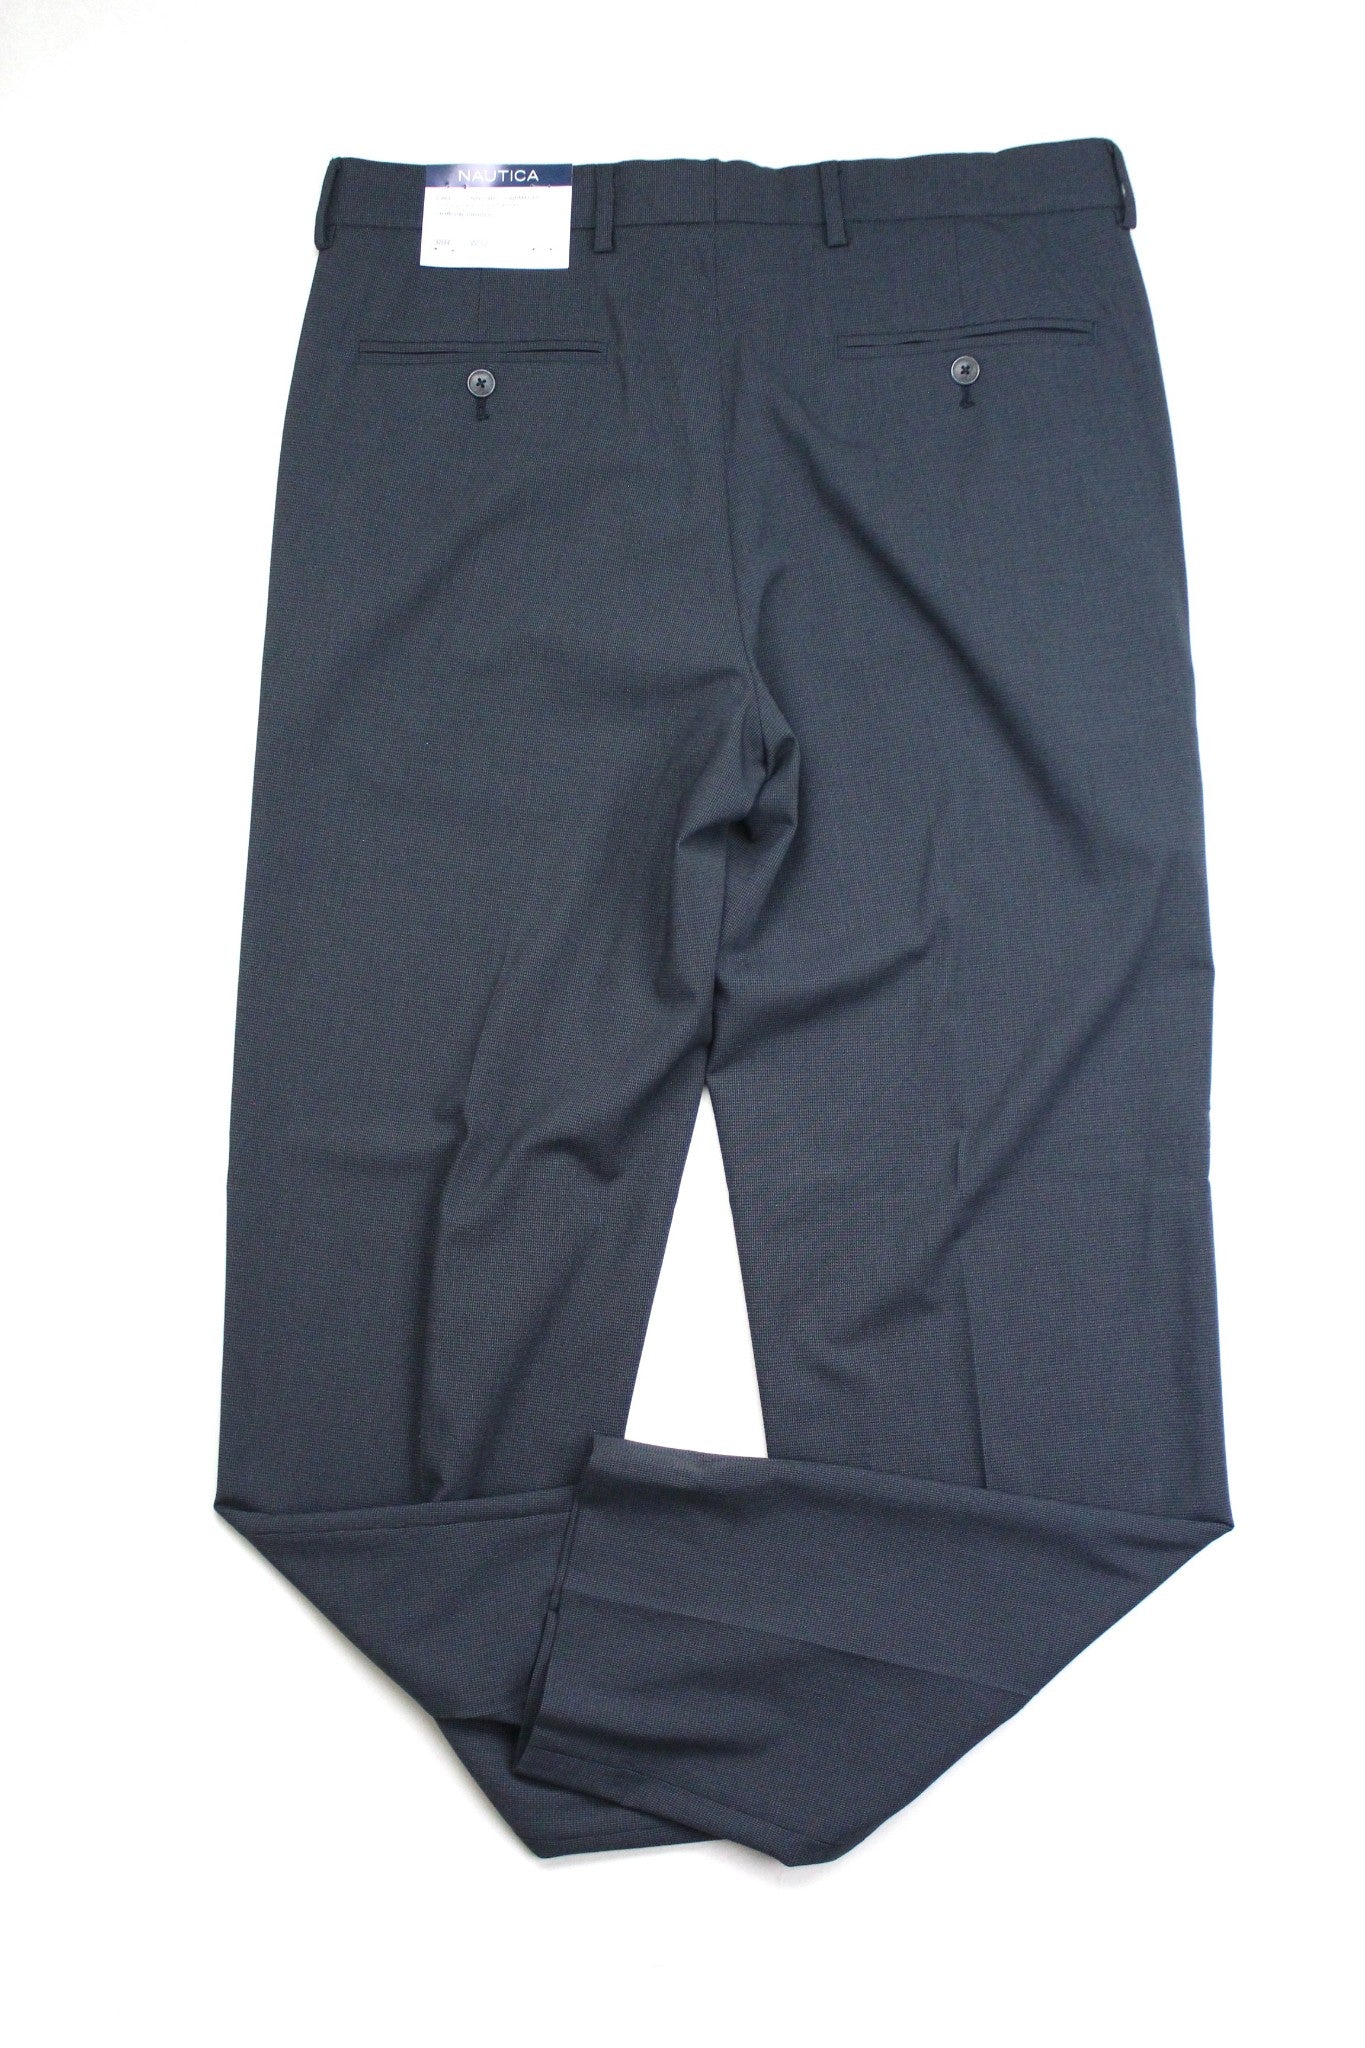 Nautica Men's Modern-Fit Bi-Stretch Suit Pants Check Charcoal 36 x 32 Flat Pant